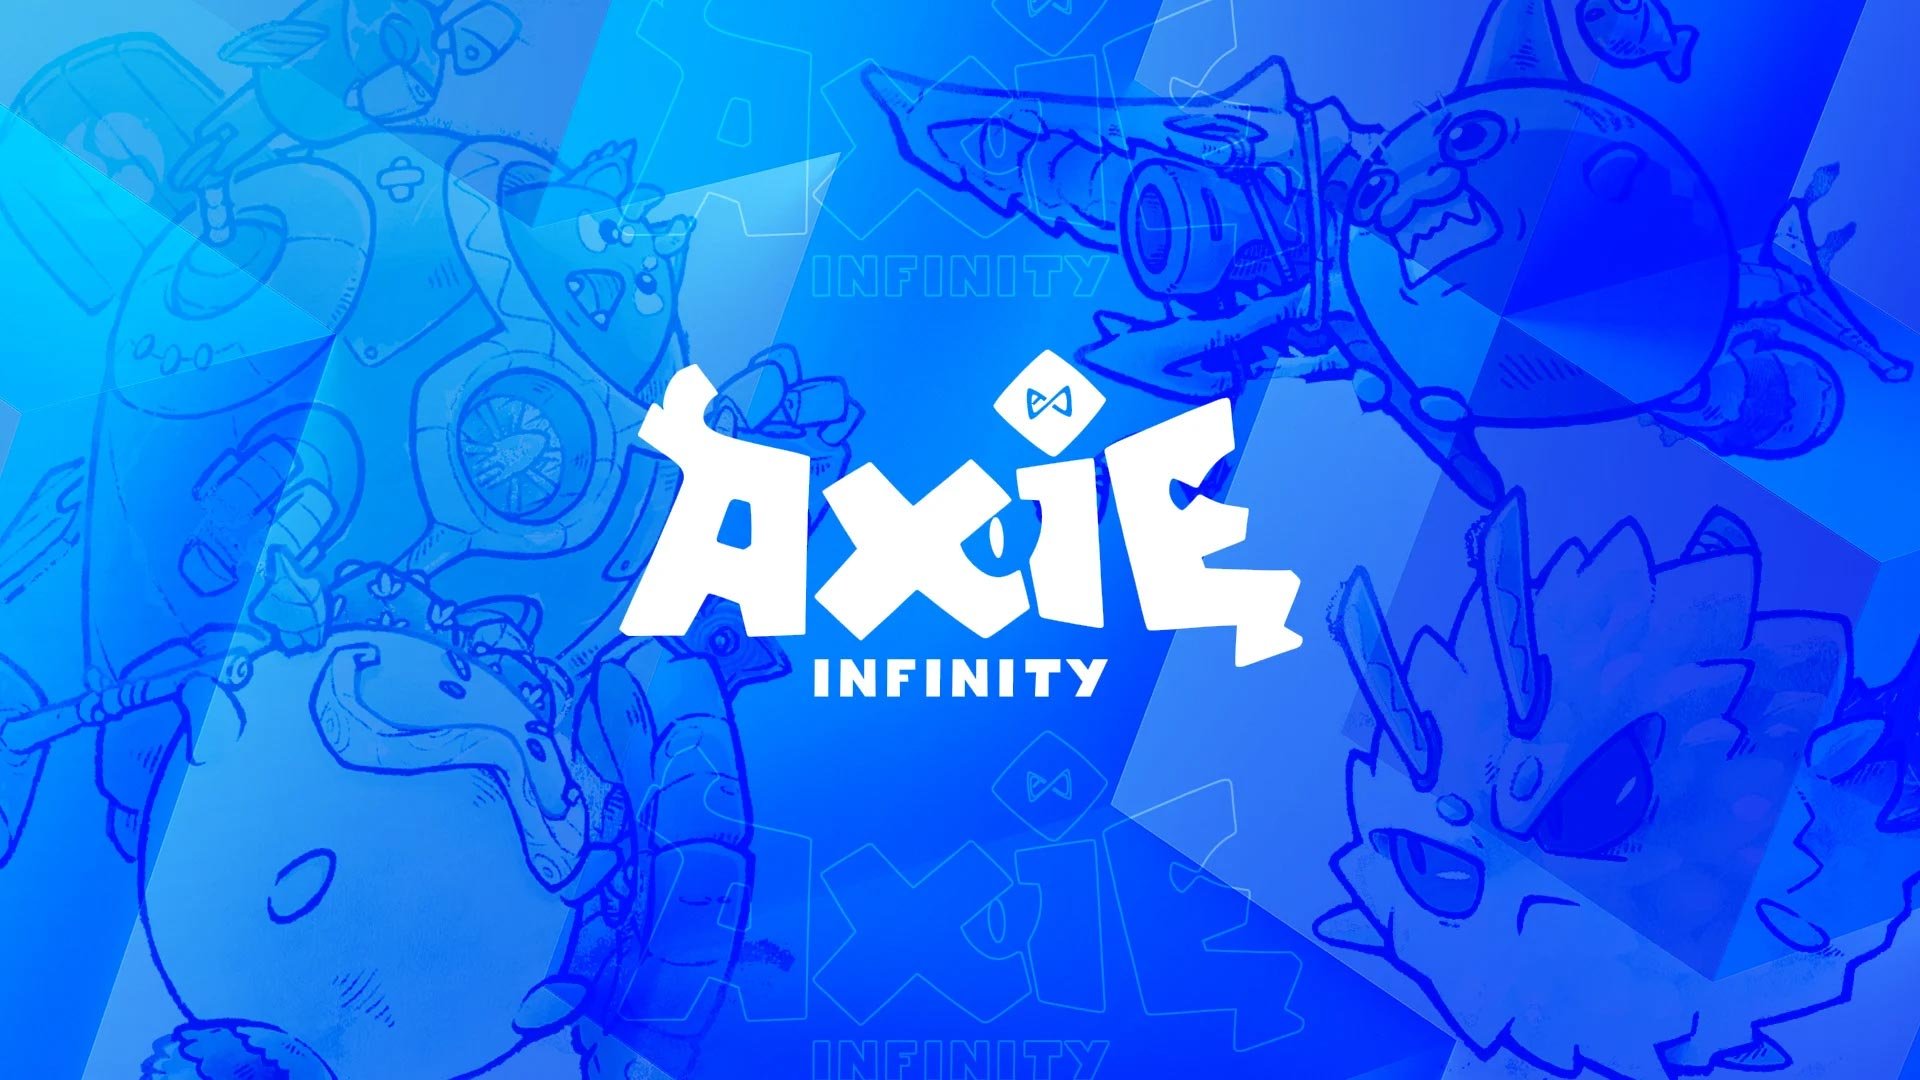 Sky Mavis soft launches Axie Infinity: Origin as a free-to-play